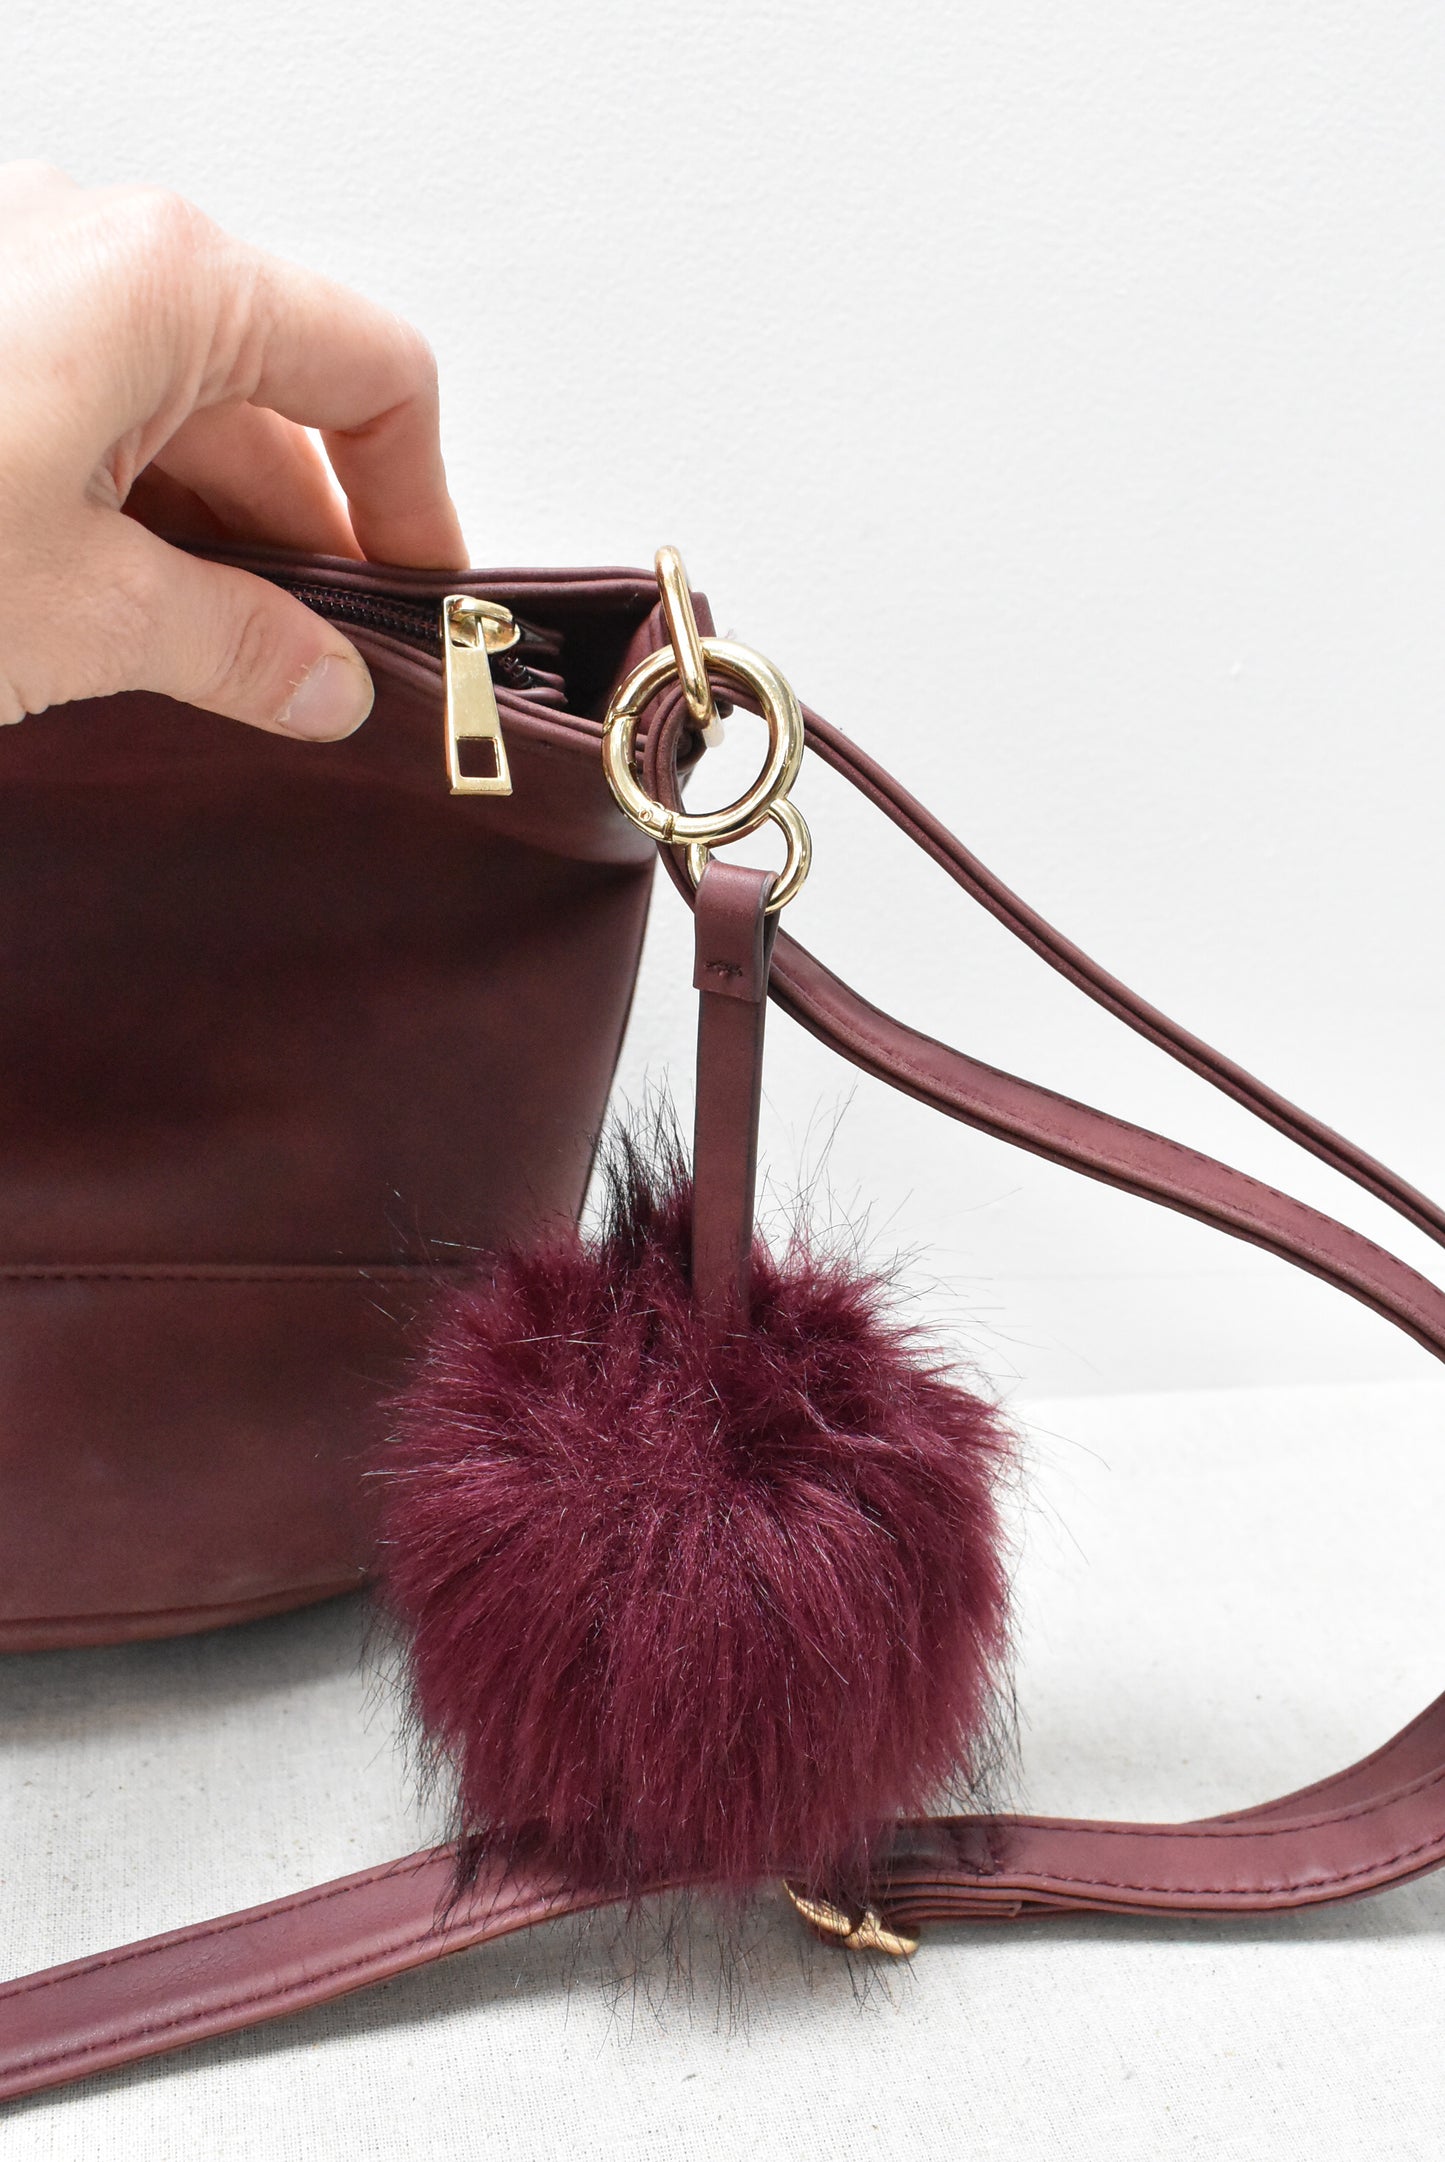 Burgundy bag with fuzzy tassle key ring (New)